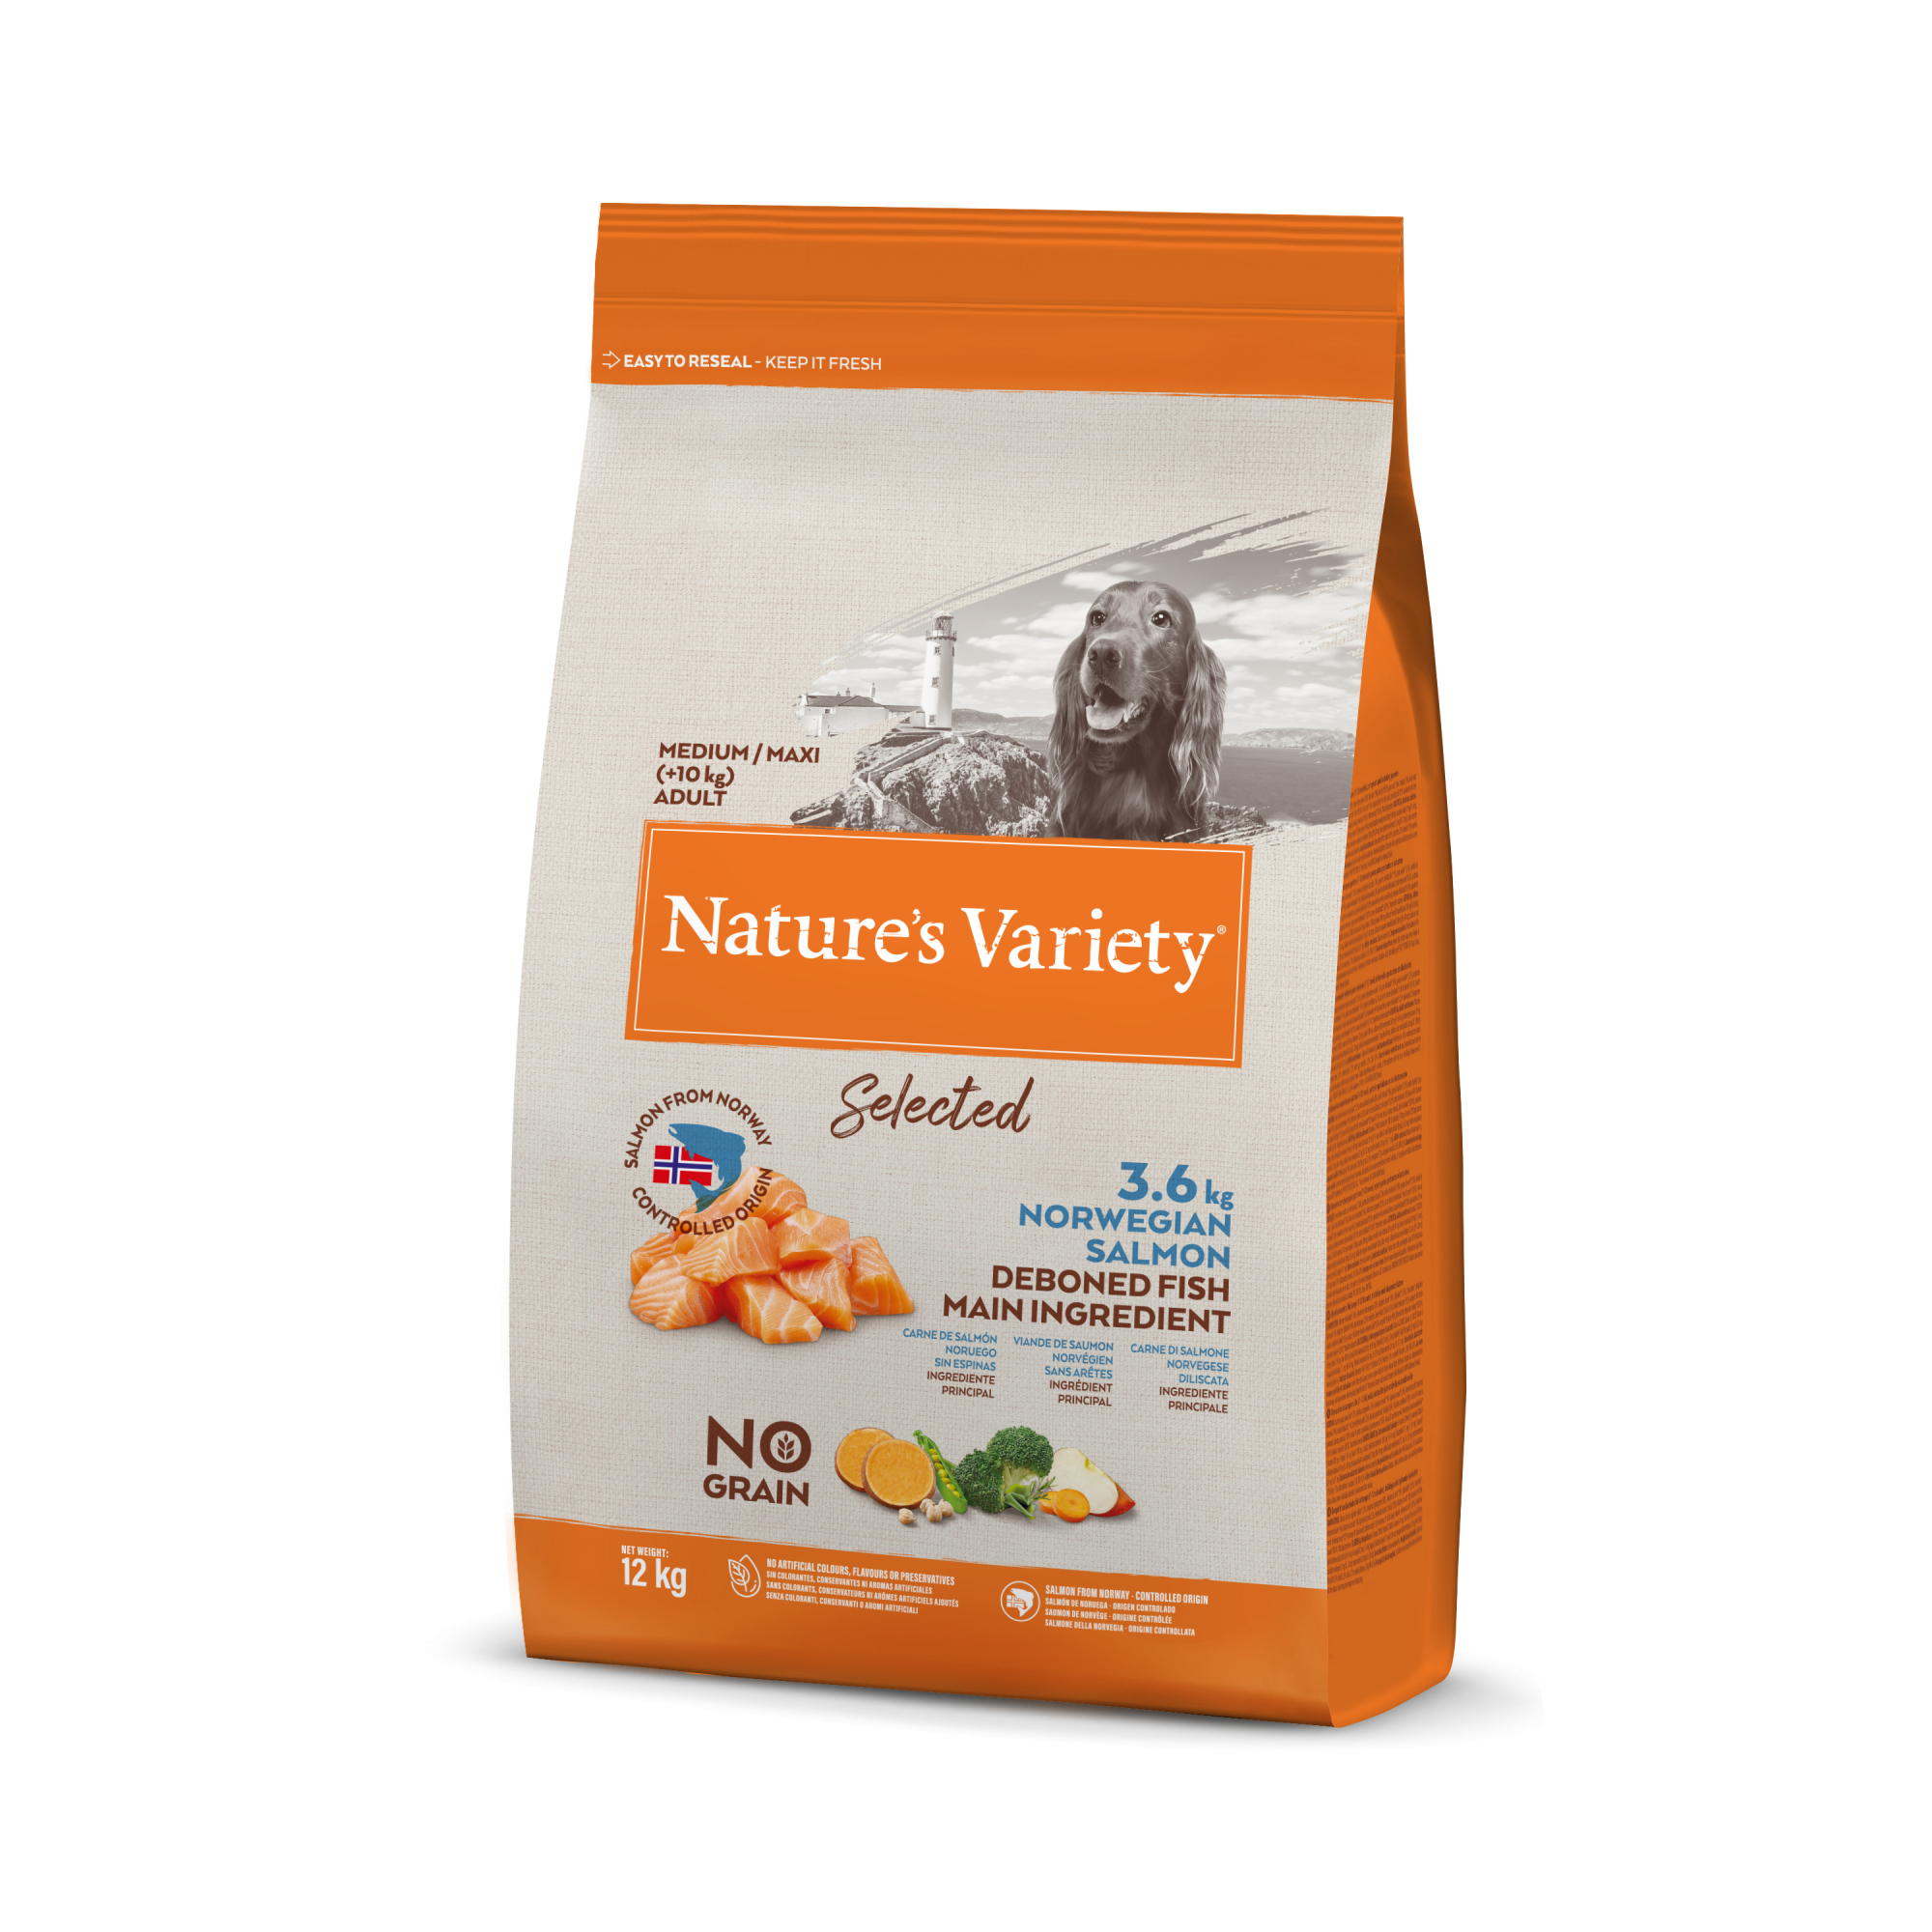 NATURE'S VARIETY Selected Medium Maxi Adult No Grain con Salmón de Noruega para perros